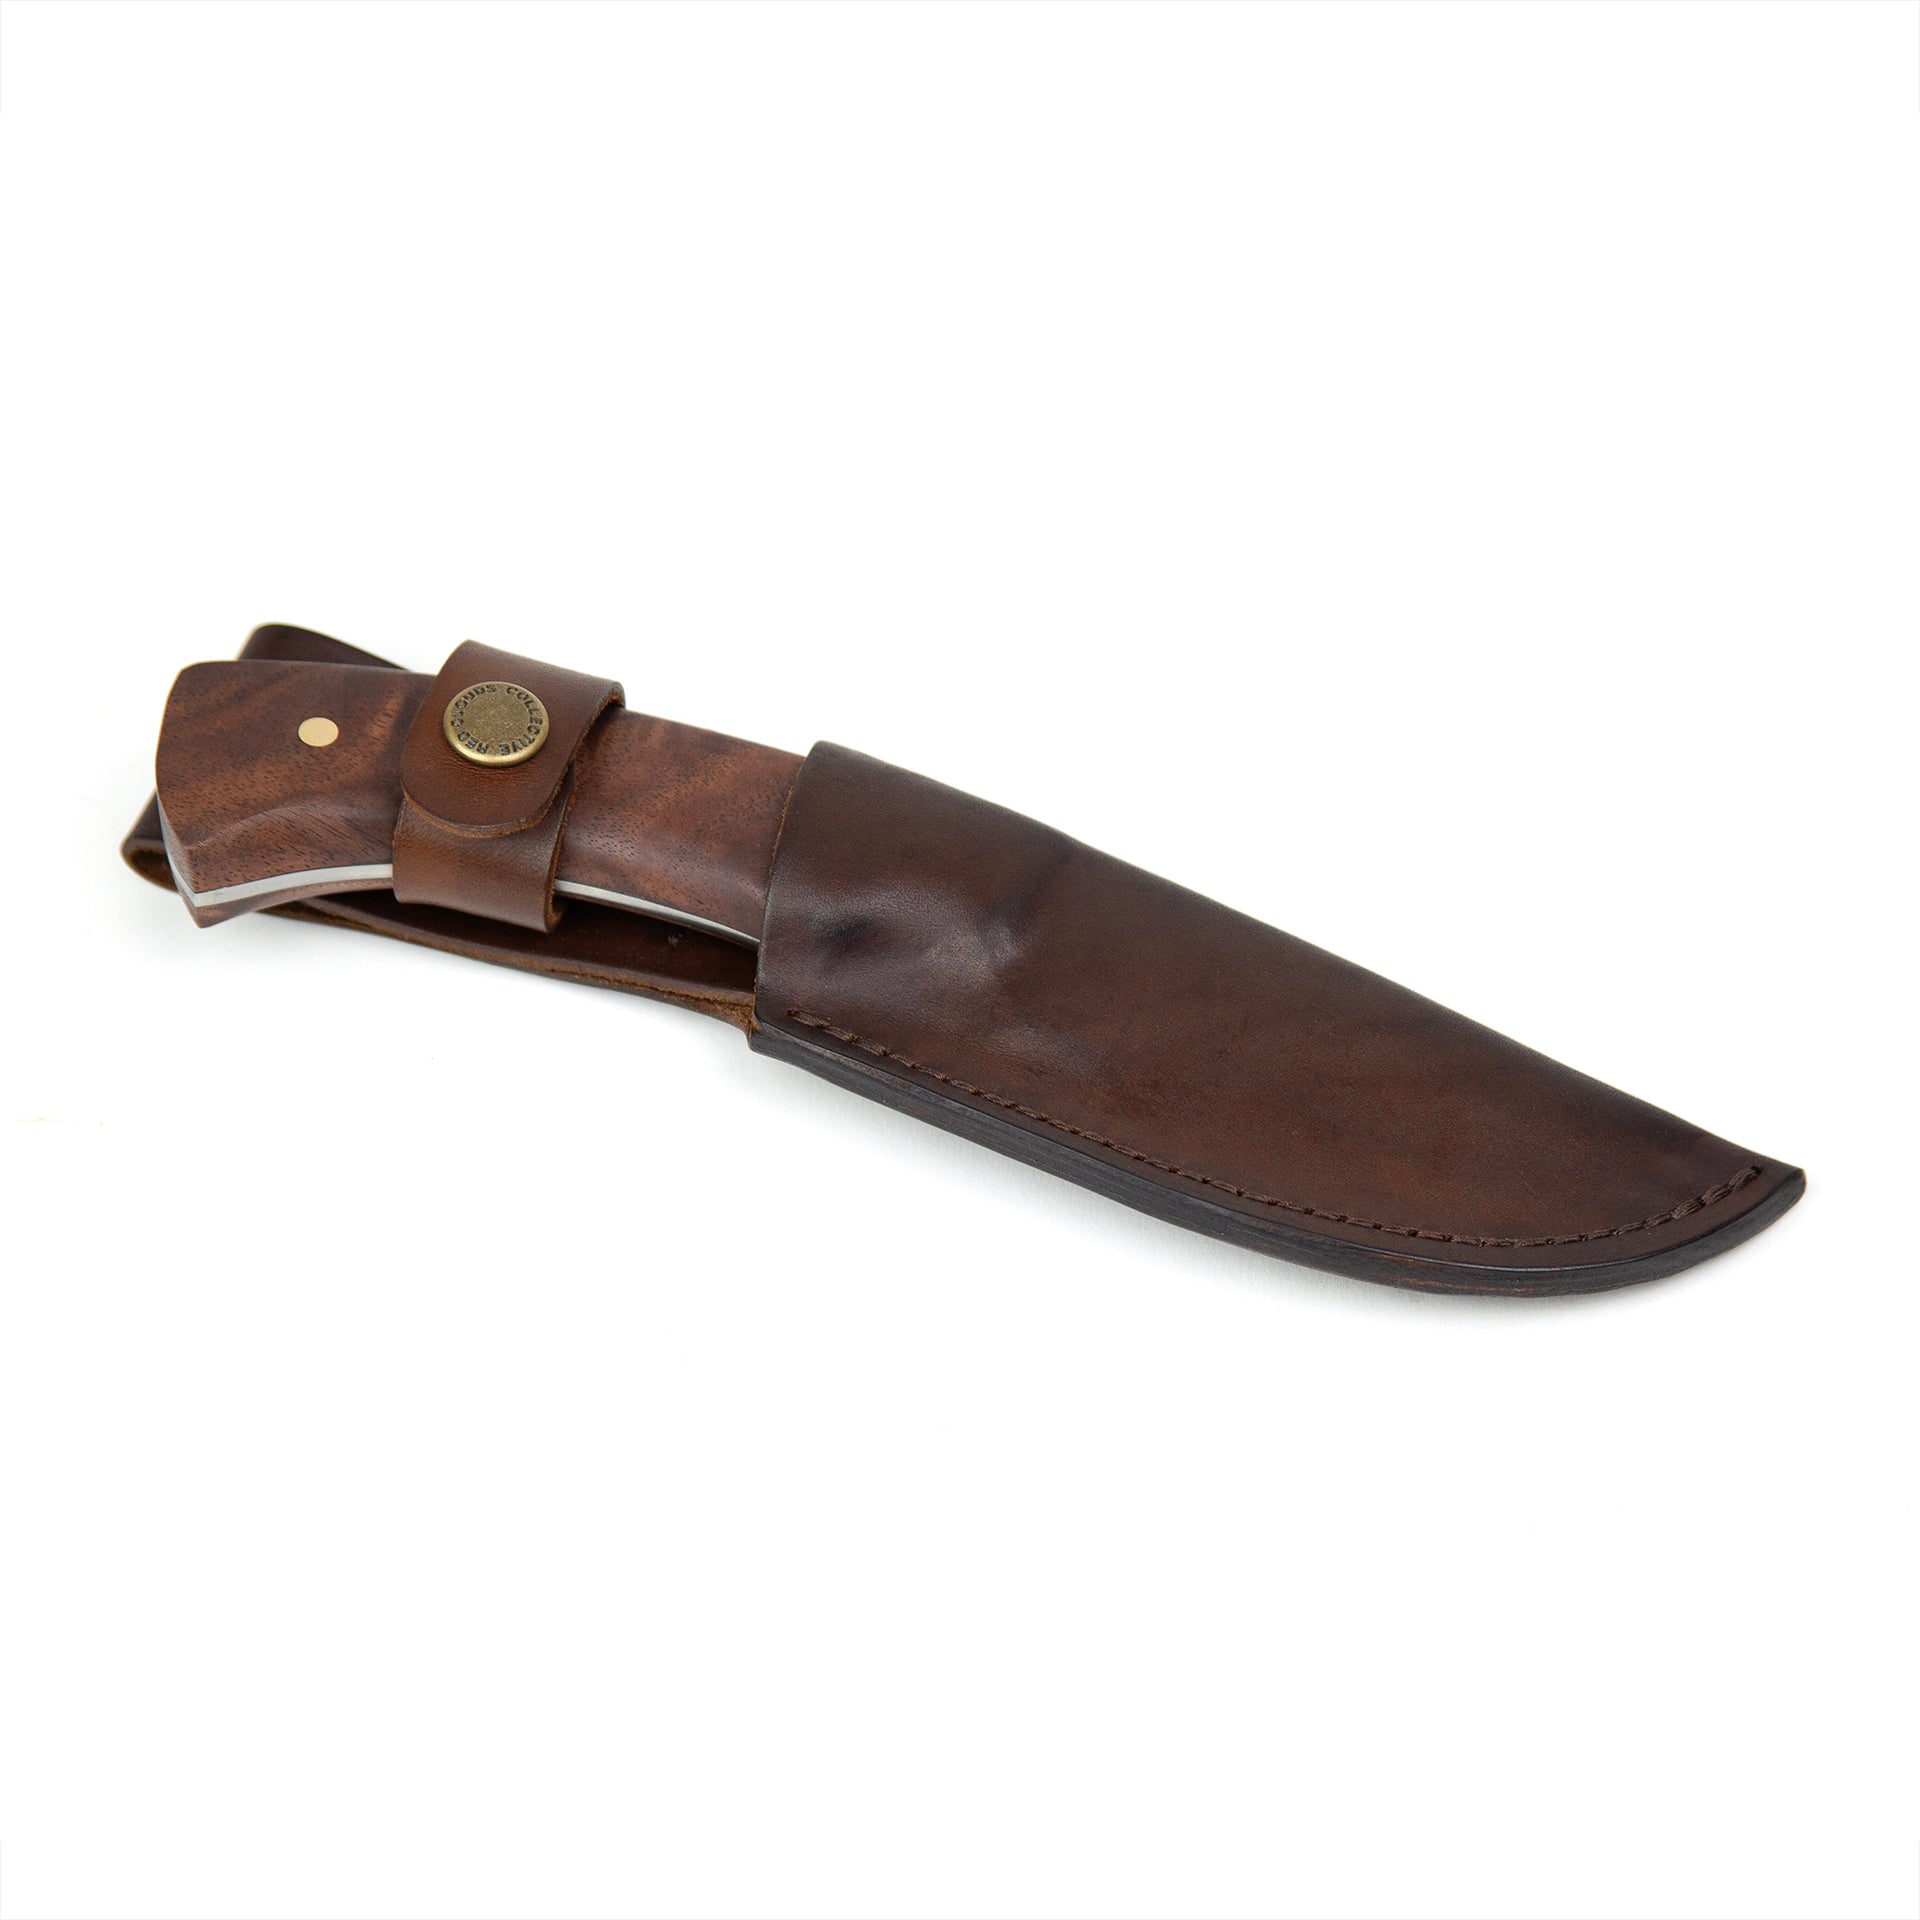 Cascade Knife and Leather Sheath